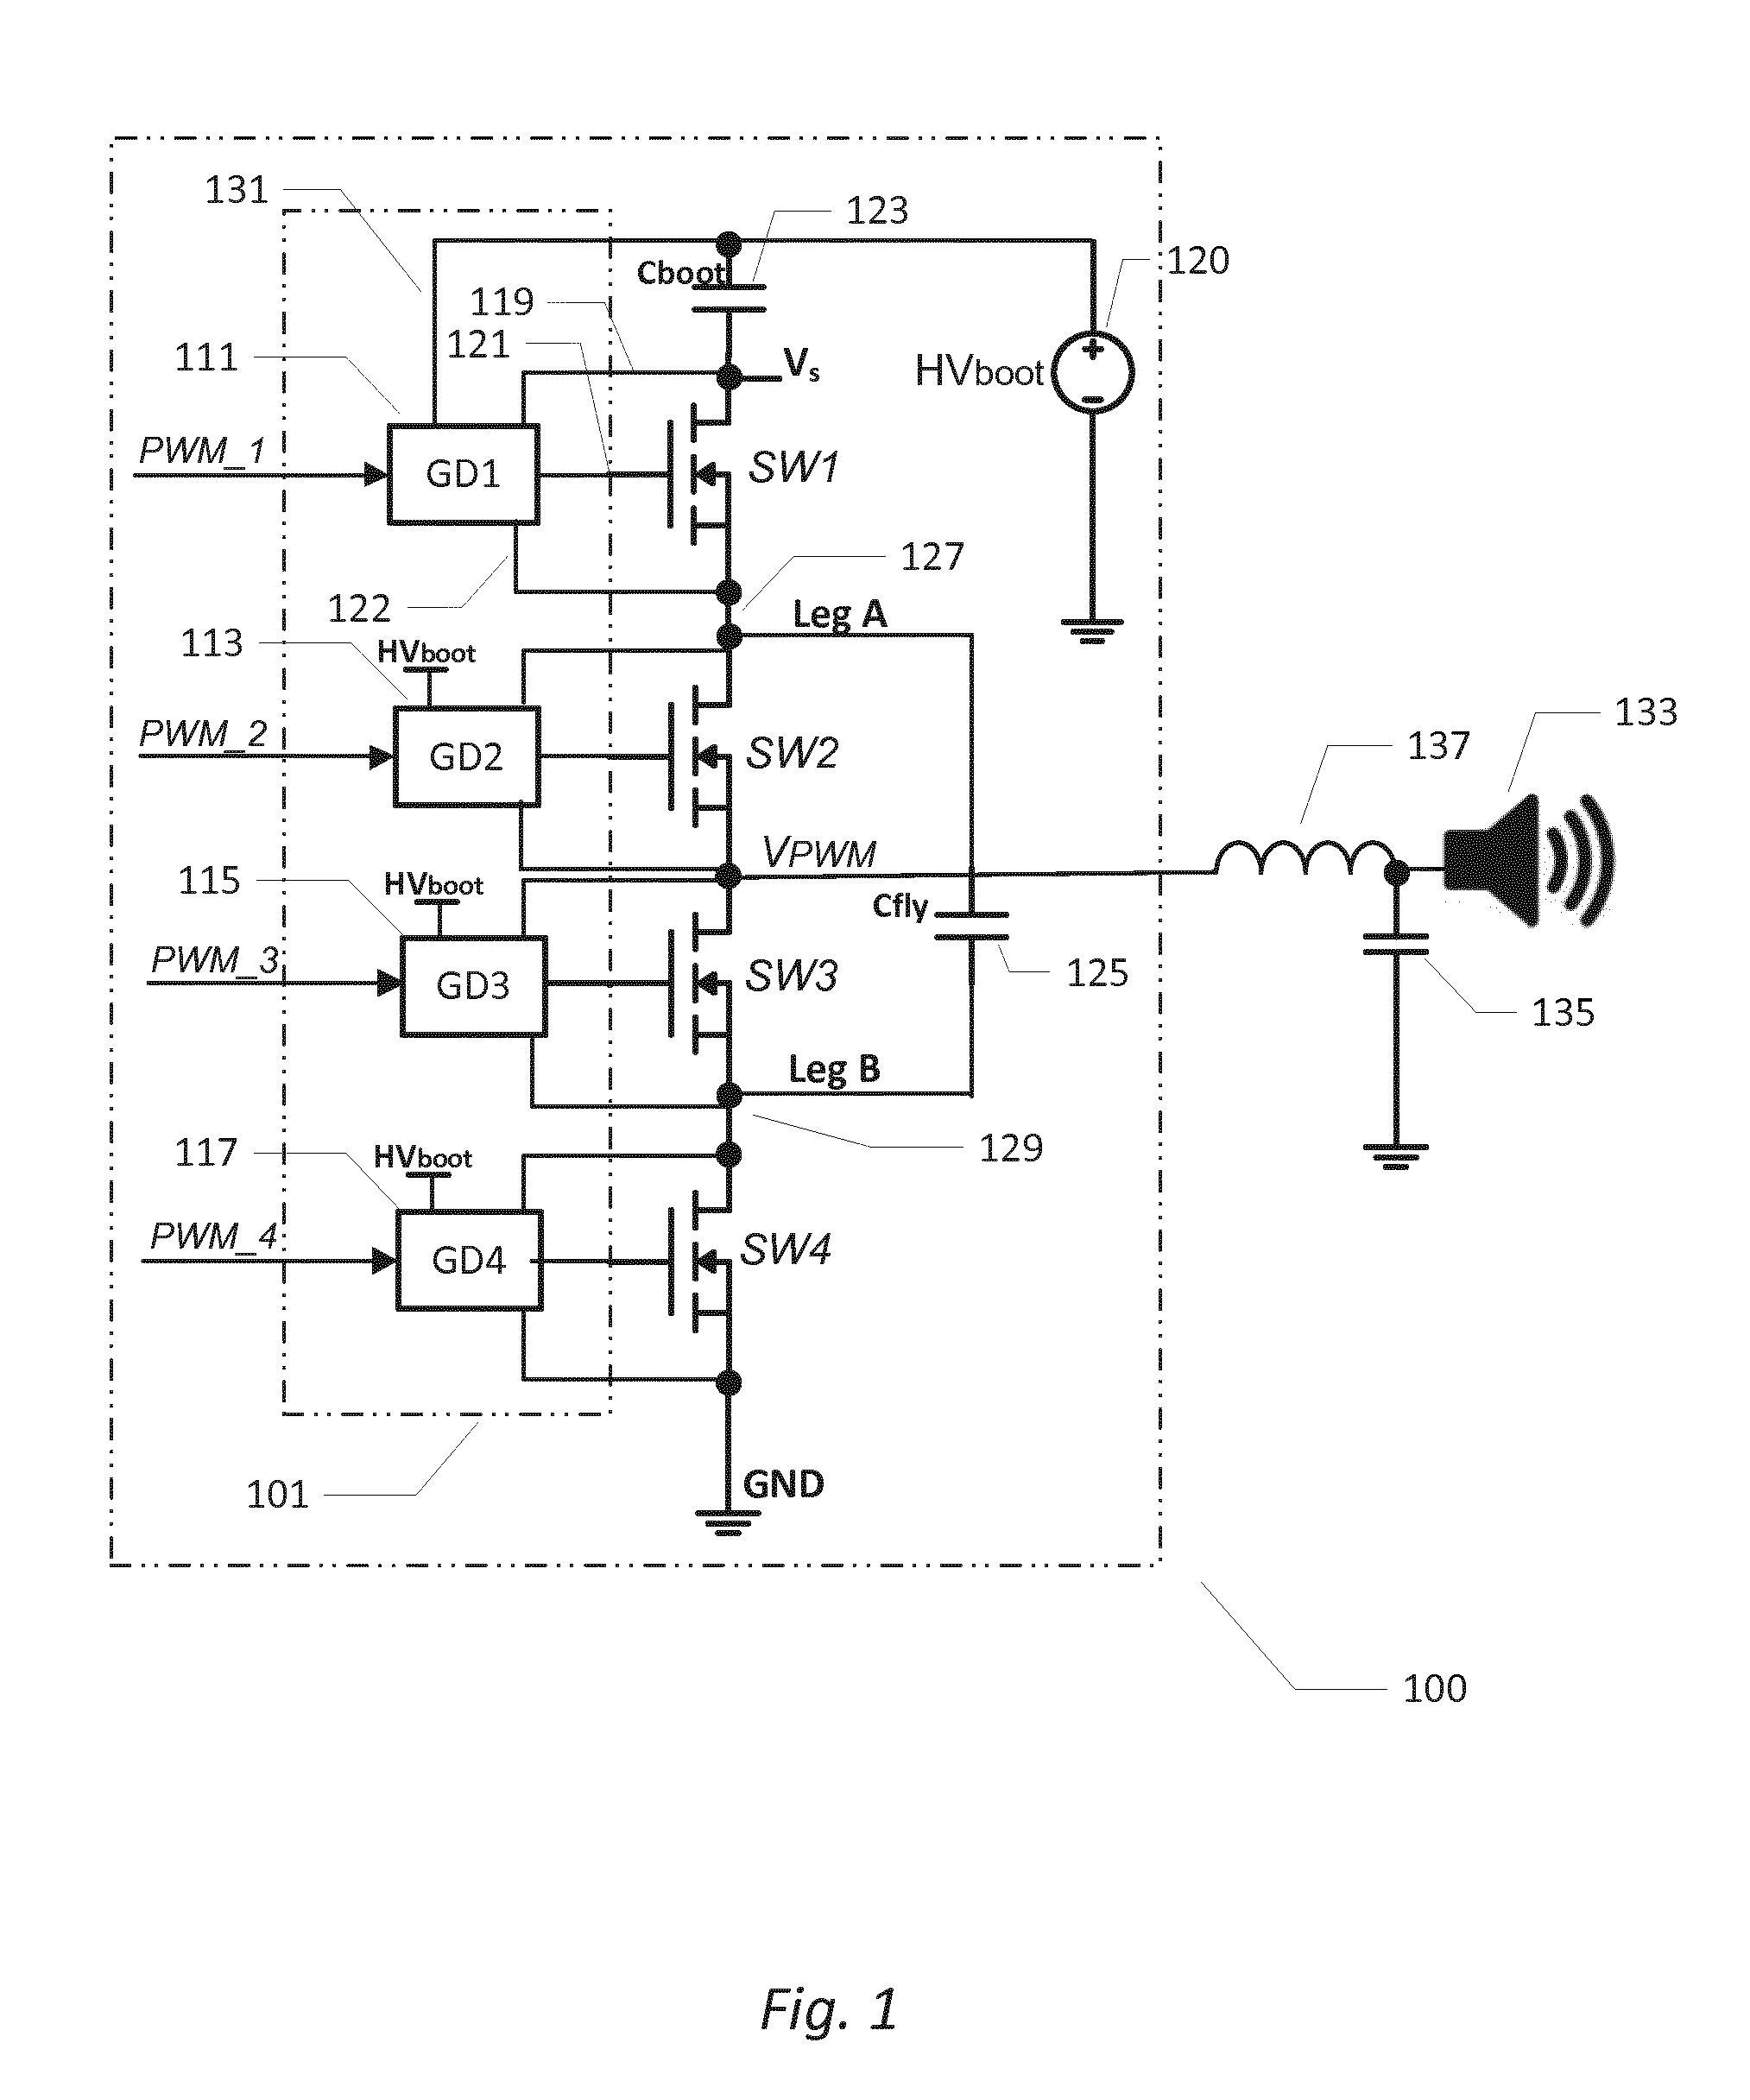 Power transistor gate driver